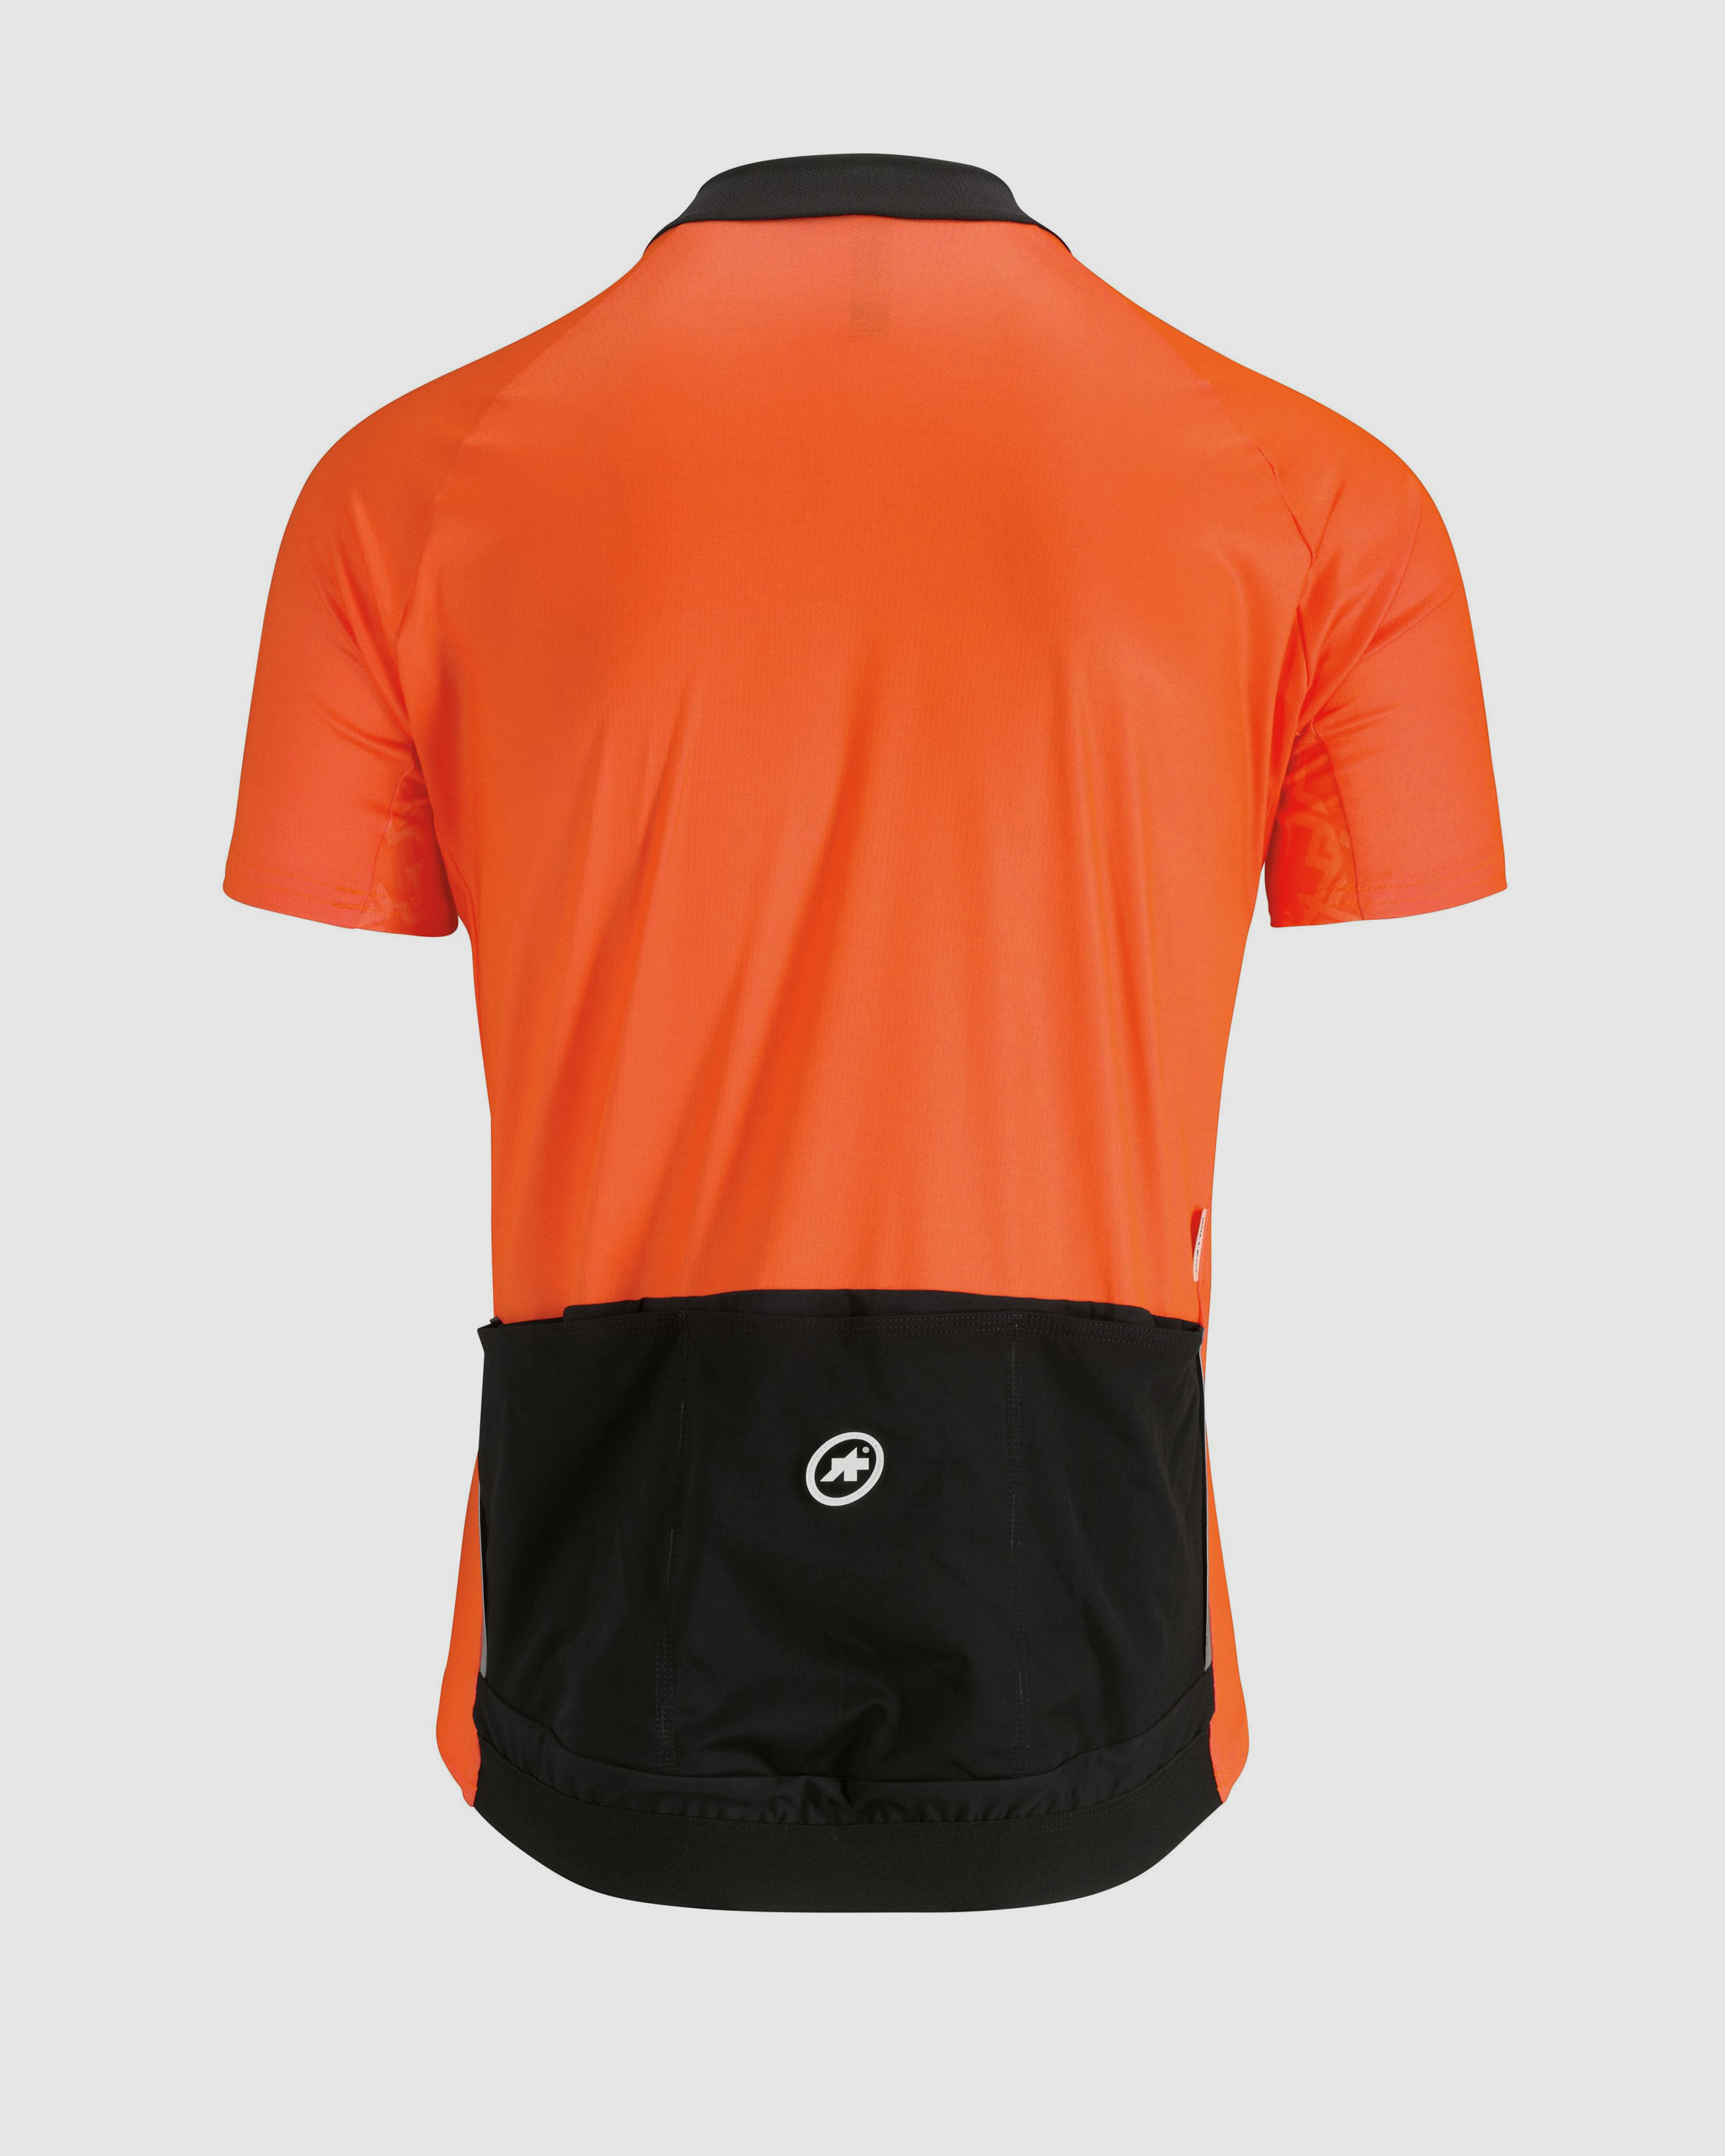 MILLE GT Short Sleeve Jersey - ASSOS Of Switzerland - Official Outlet